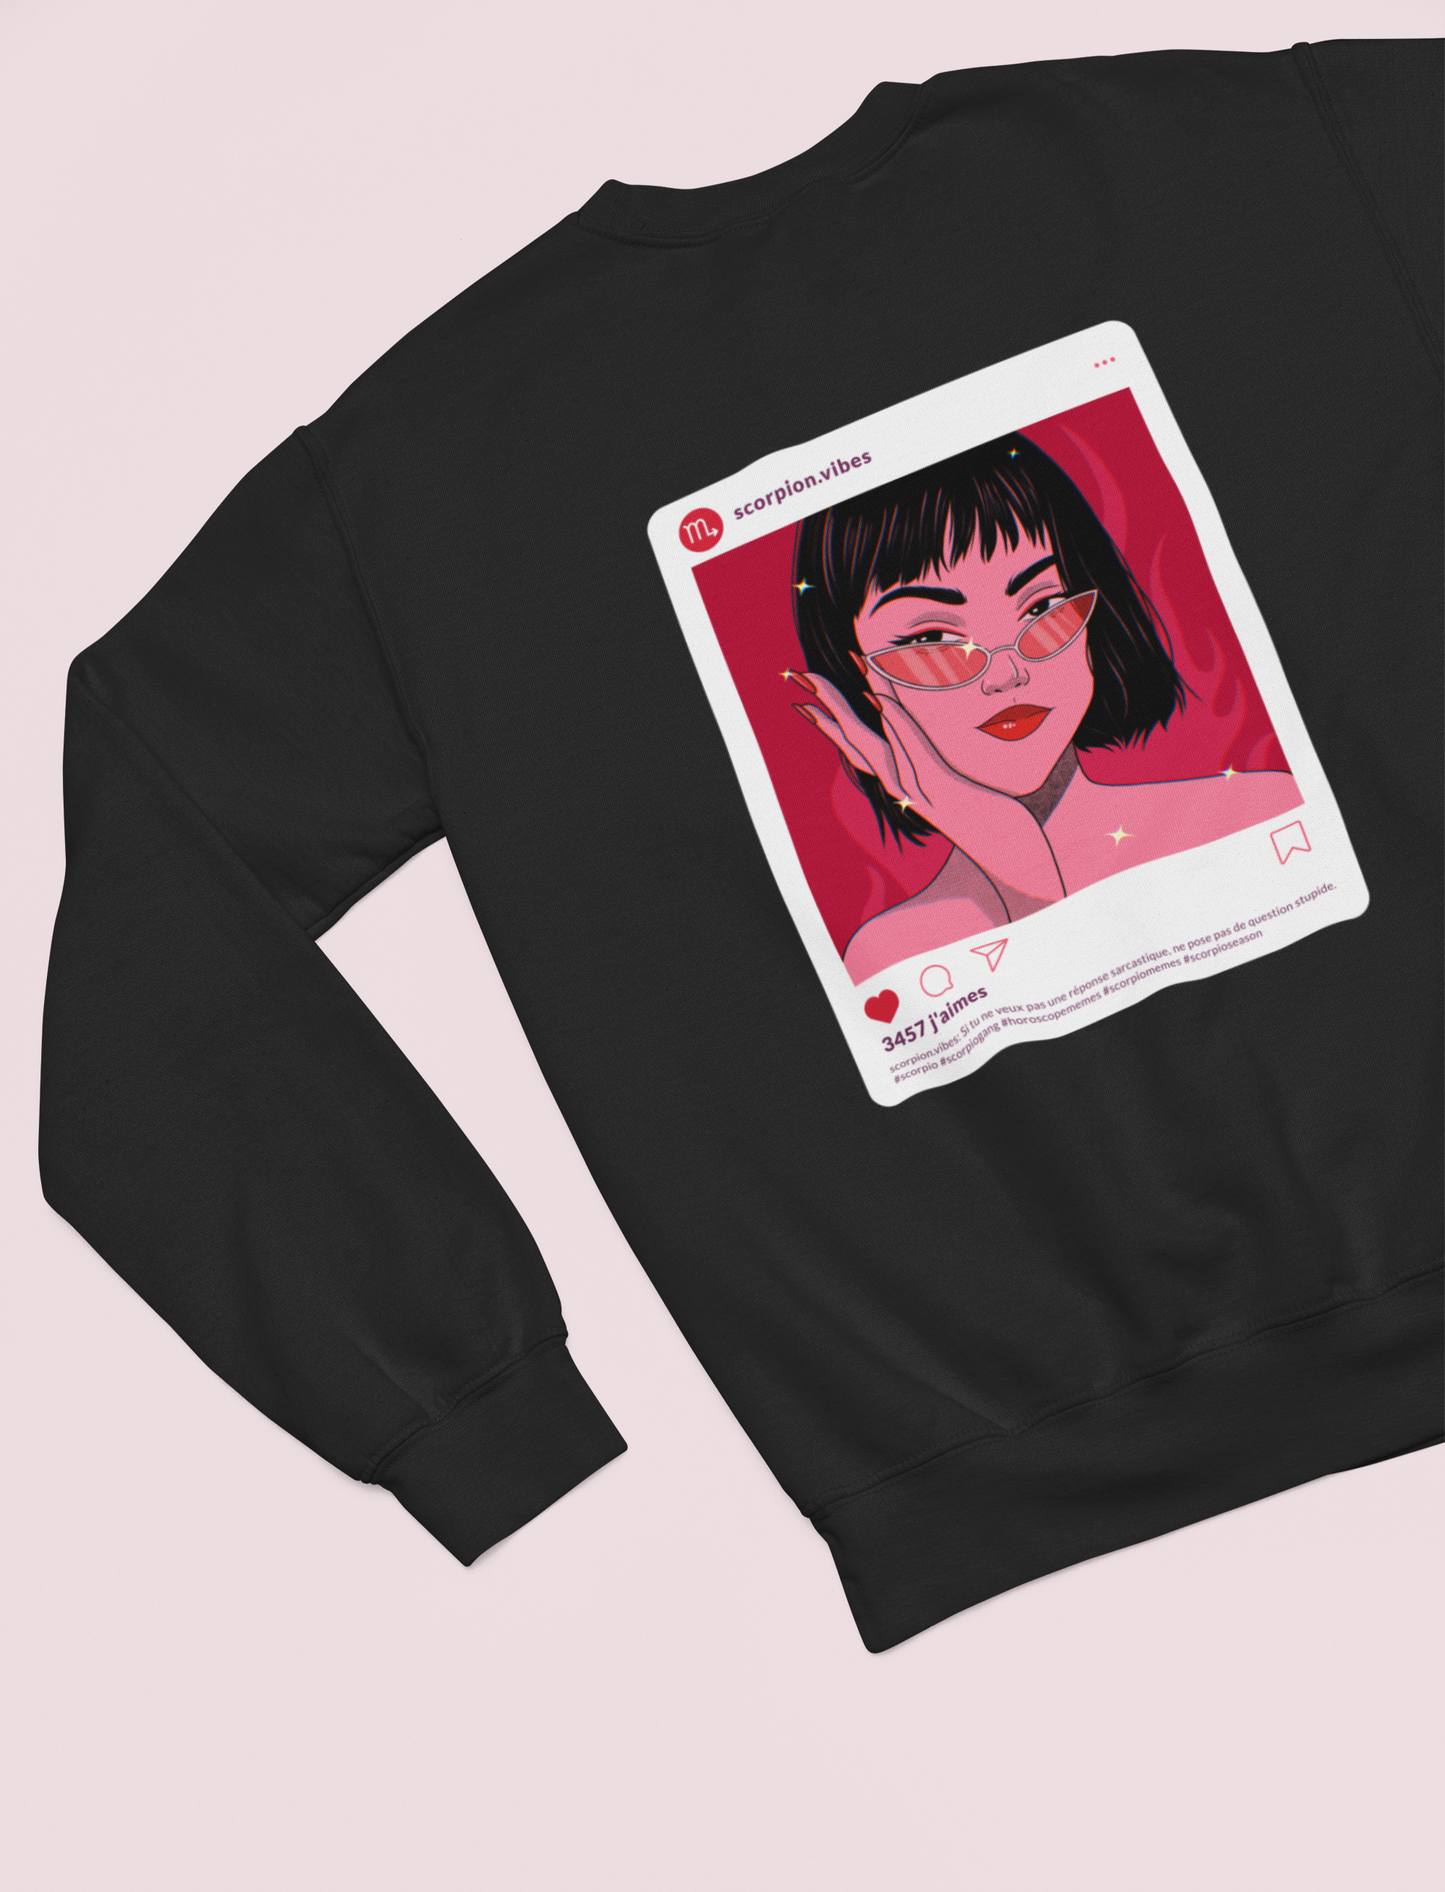 Crewneck sweatshirt -SCORPION- for adults